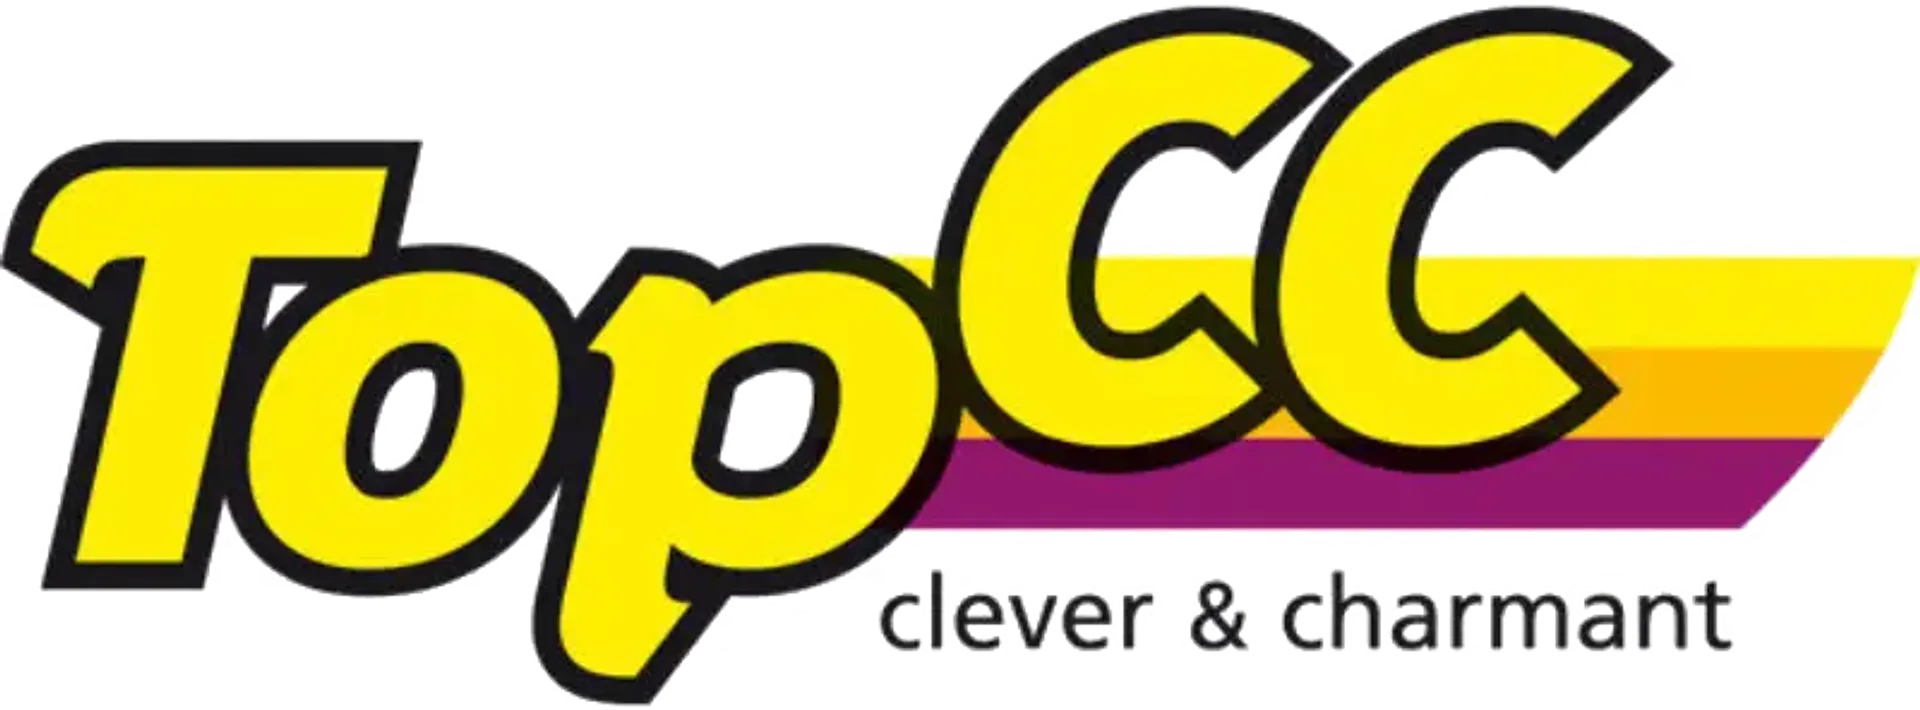 TOPCC logo